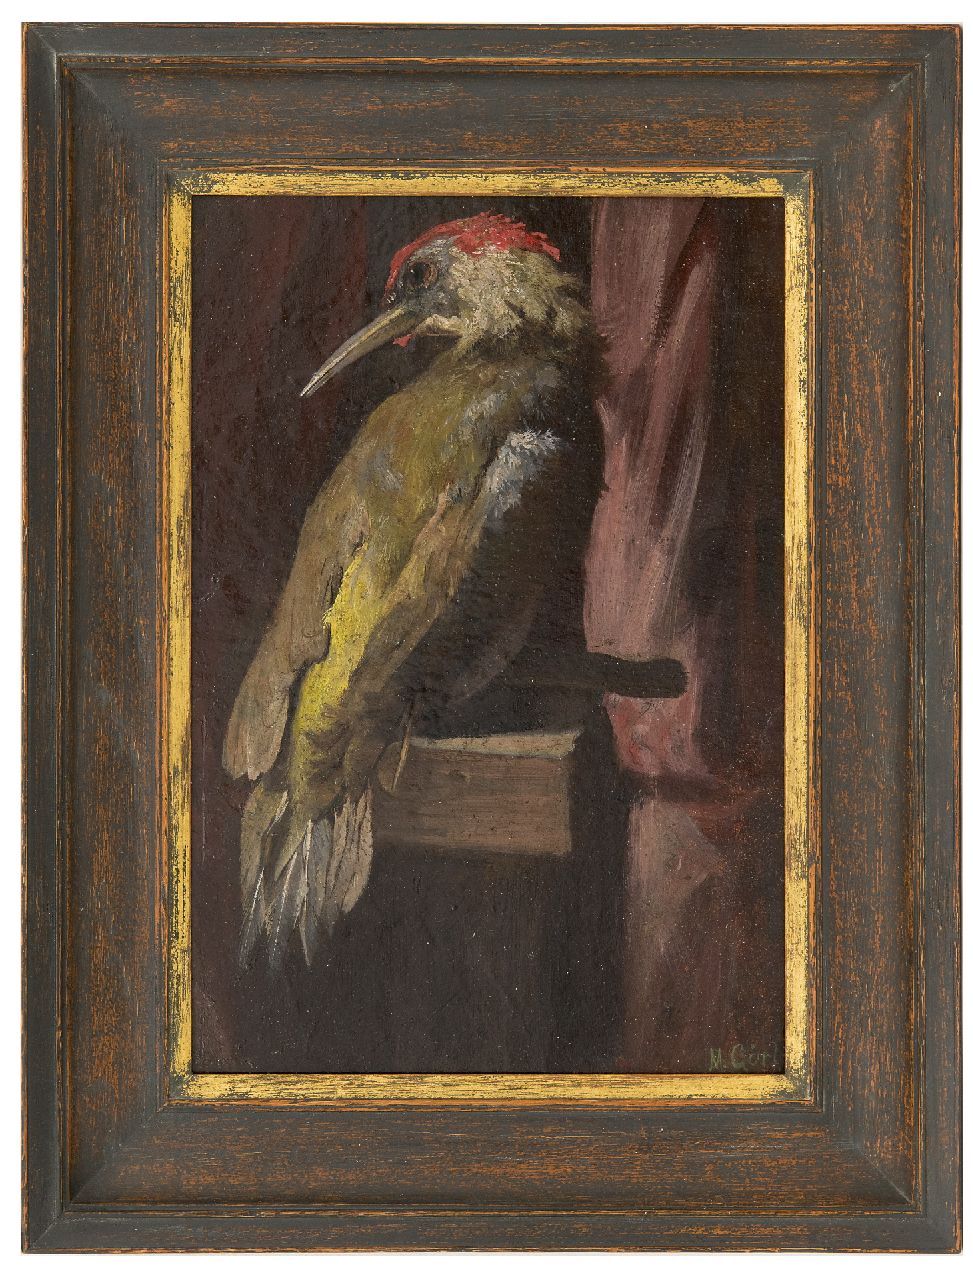 Görlich M.  | Marie Görlich, Green woodpecker, oil on paper laid down on board 26.9 x 18.3 cm, signed l.r.